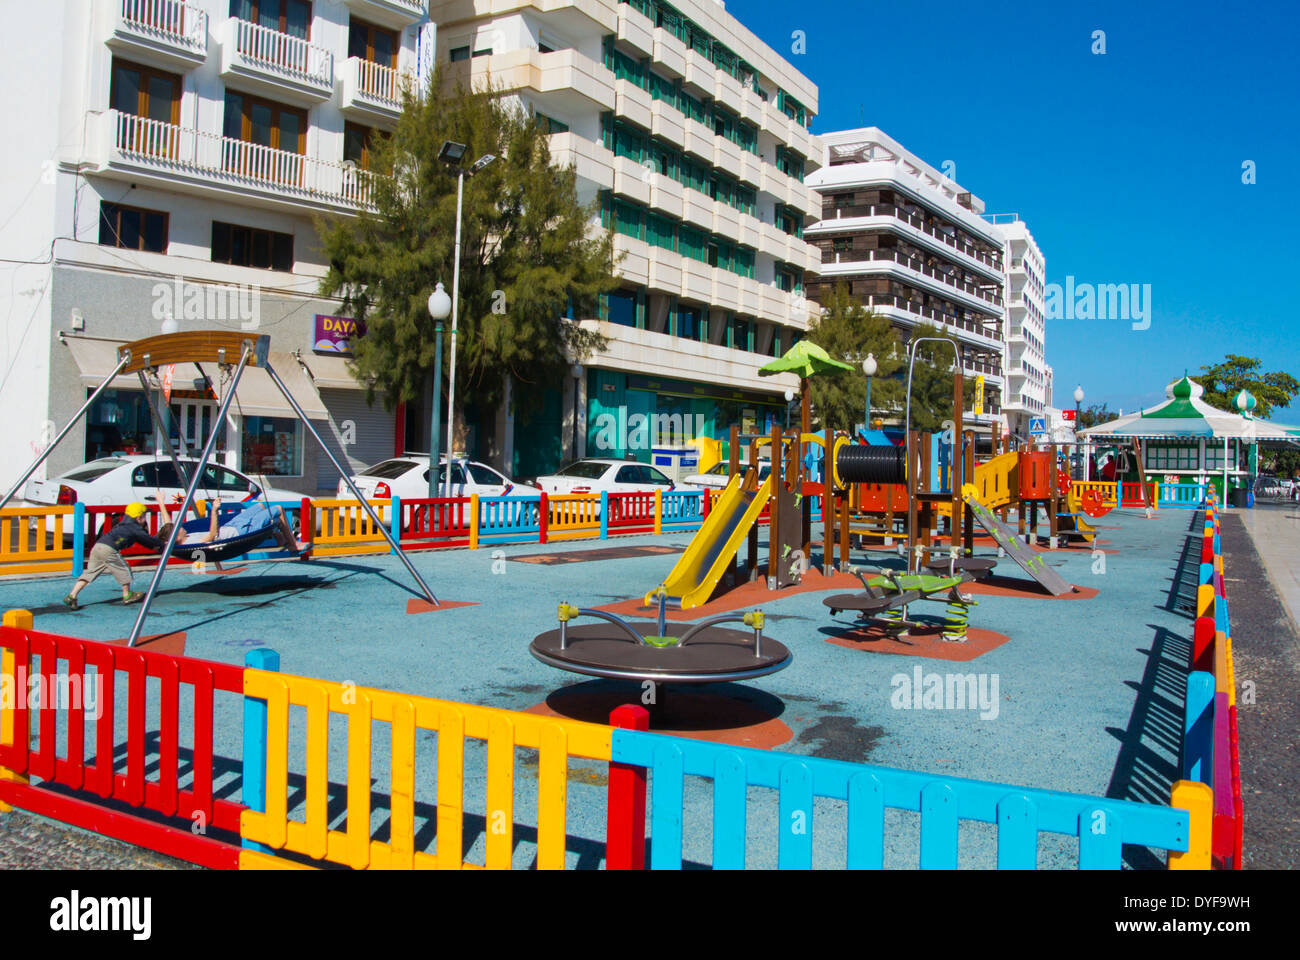 Aire de jeux, La Marina station street, Arrecife, Lanzarote, Canary Islands, Spain, Europe Banque D'Images